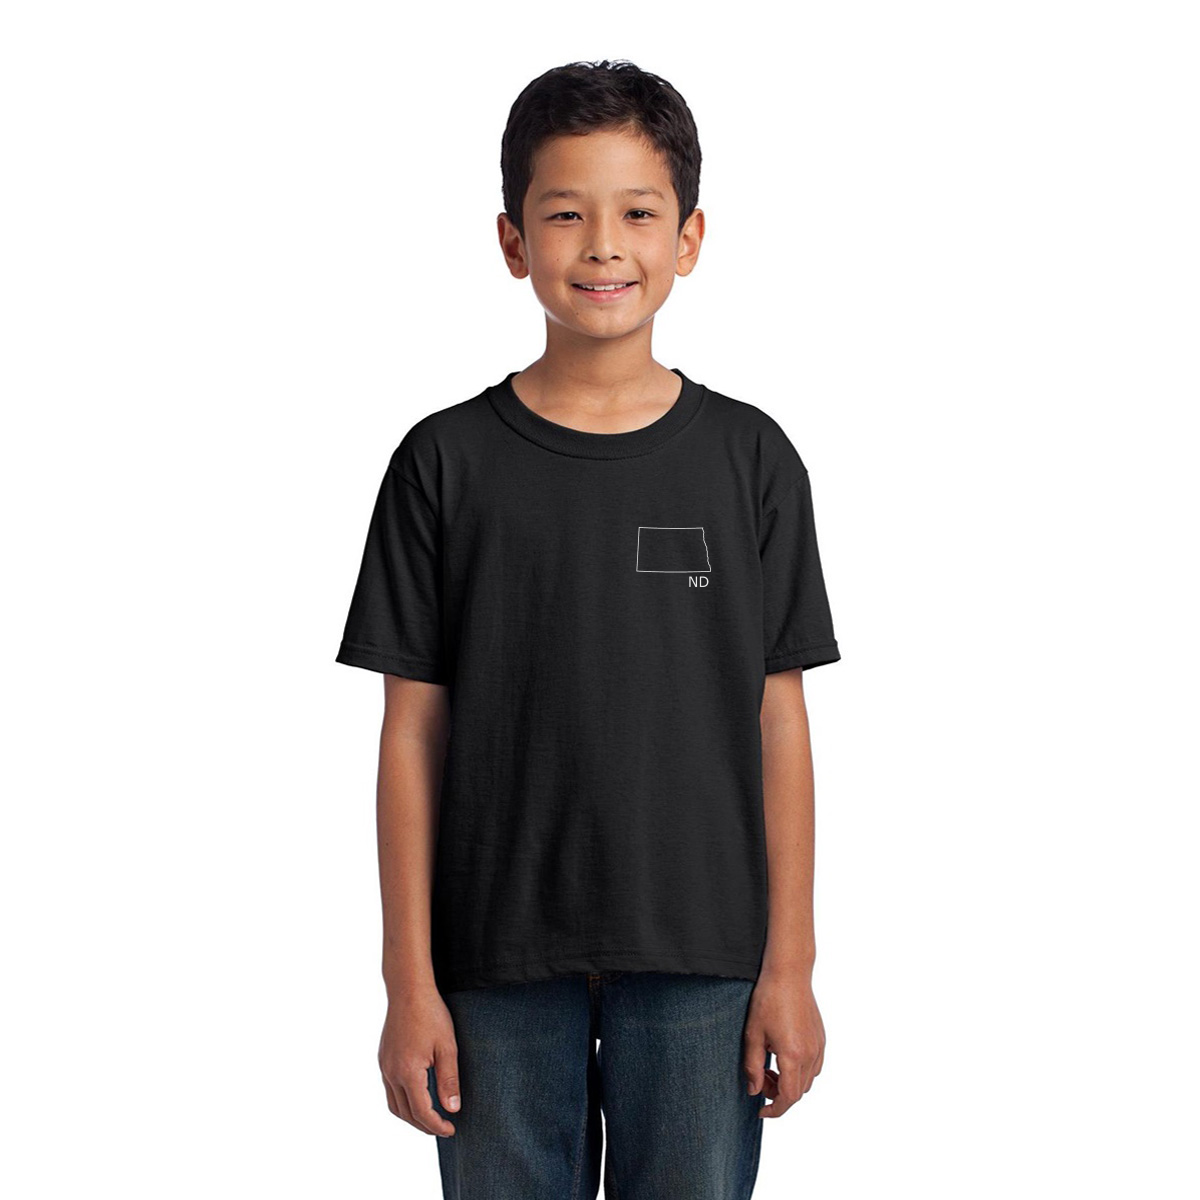 North Dakota Kids T-shirt | Black